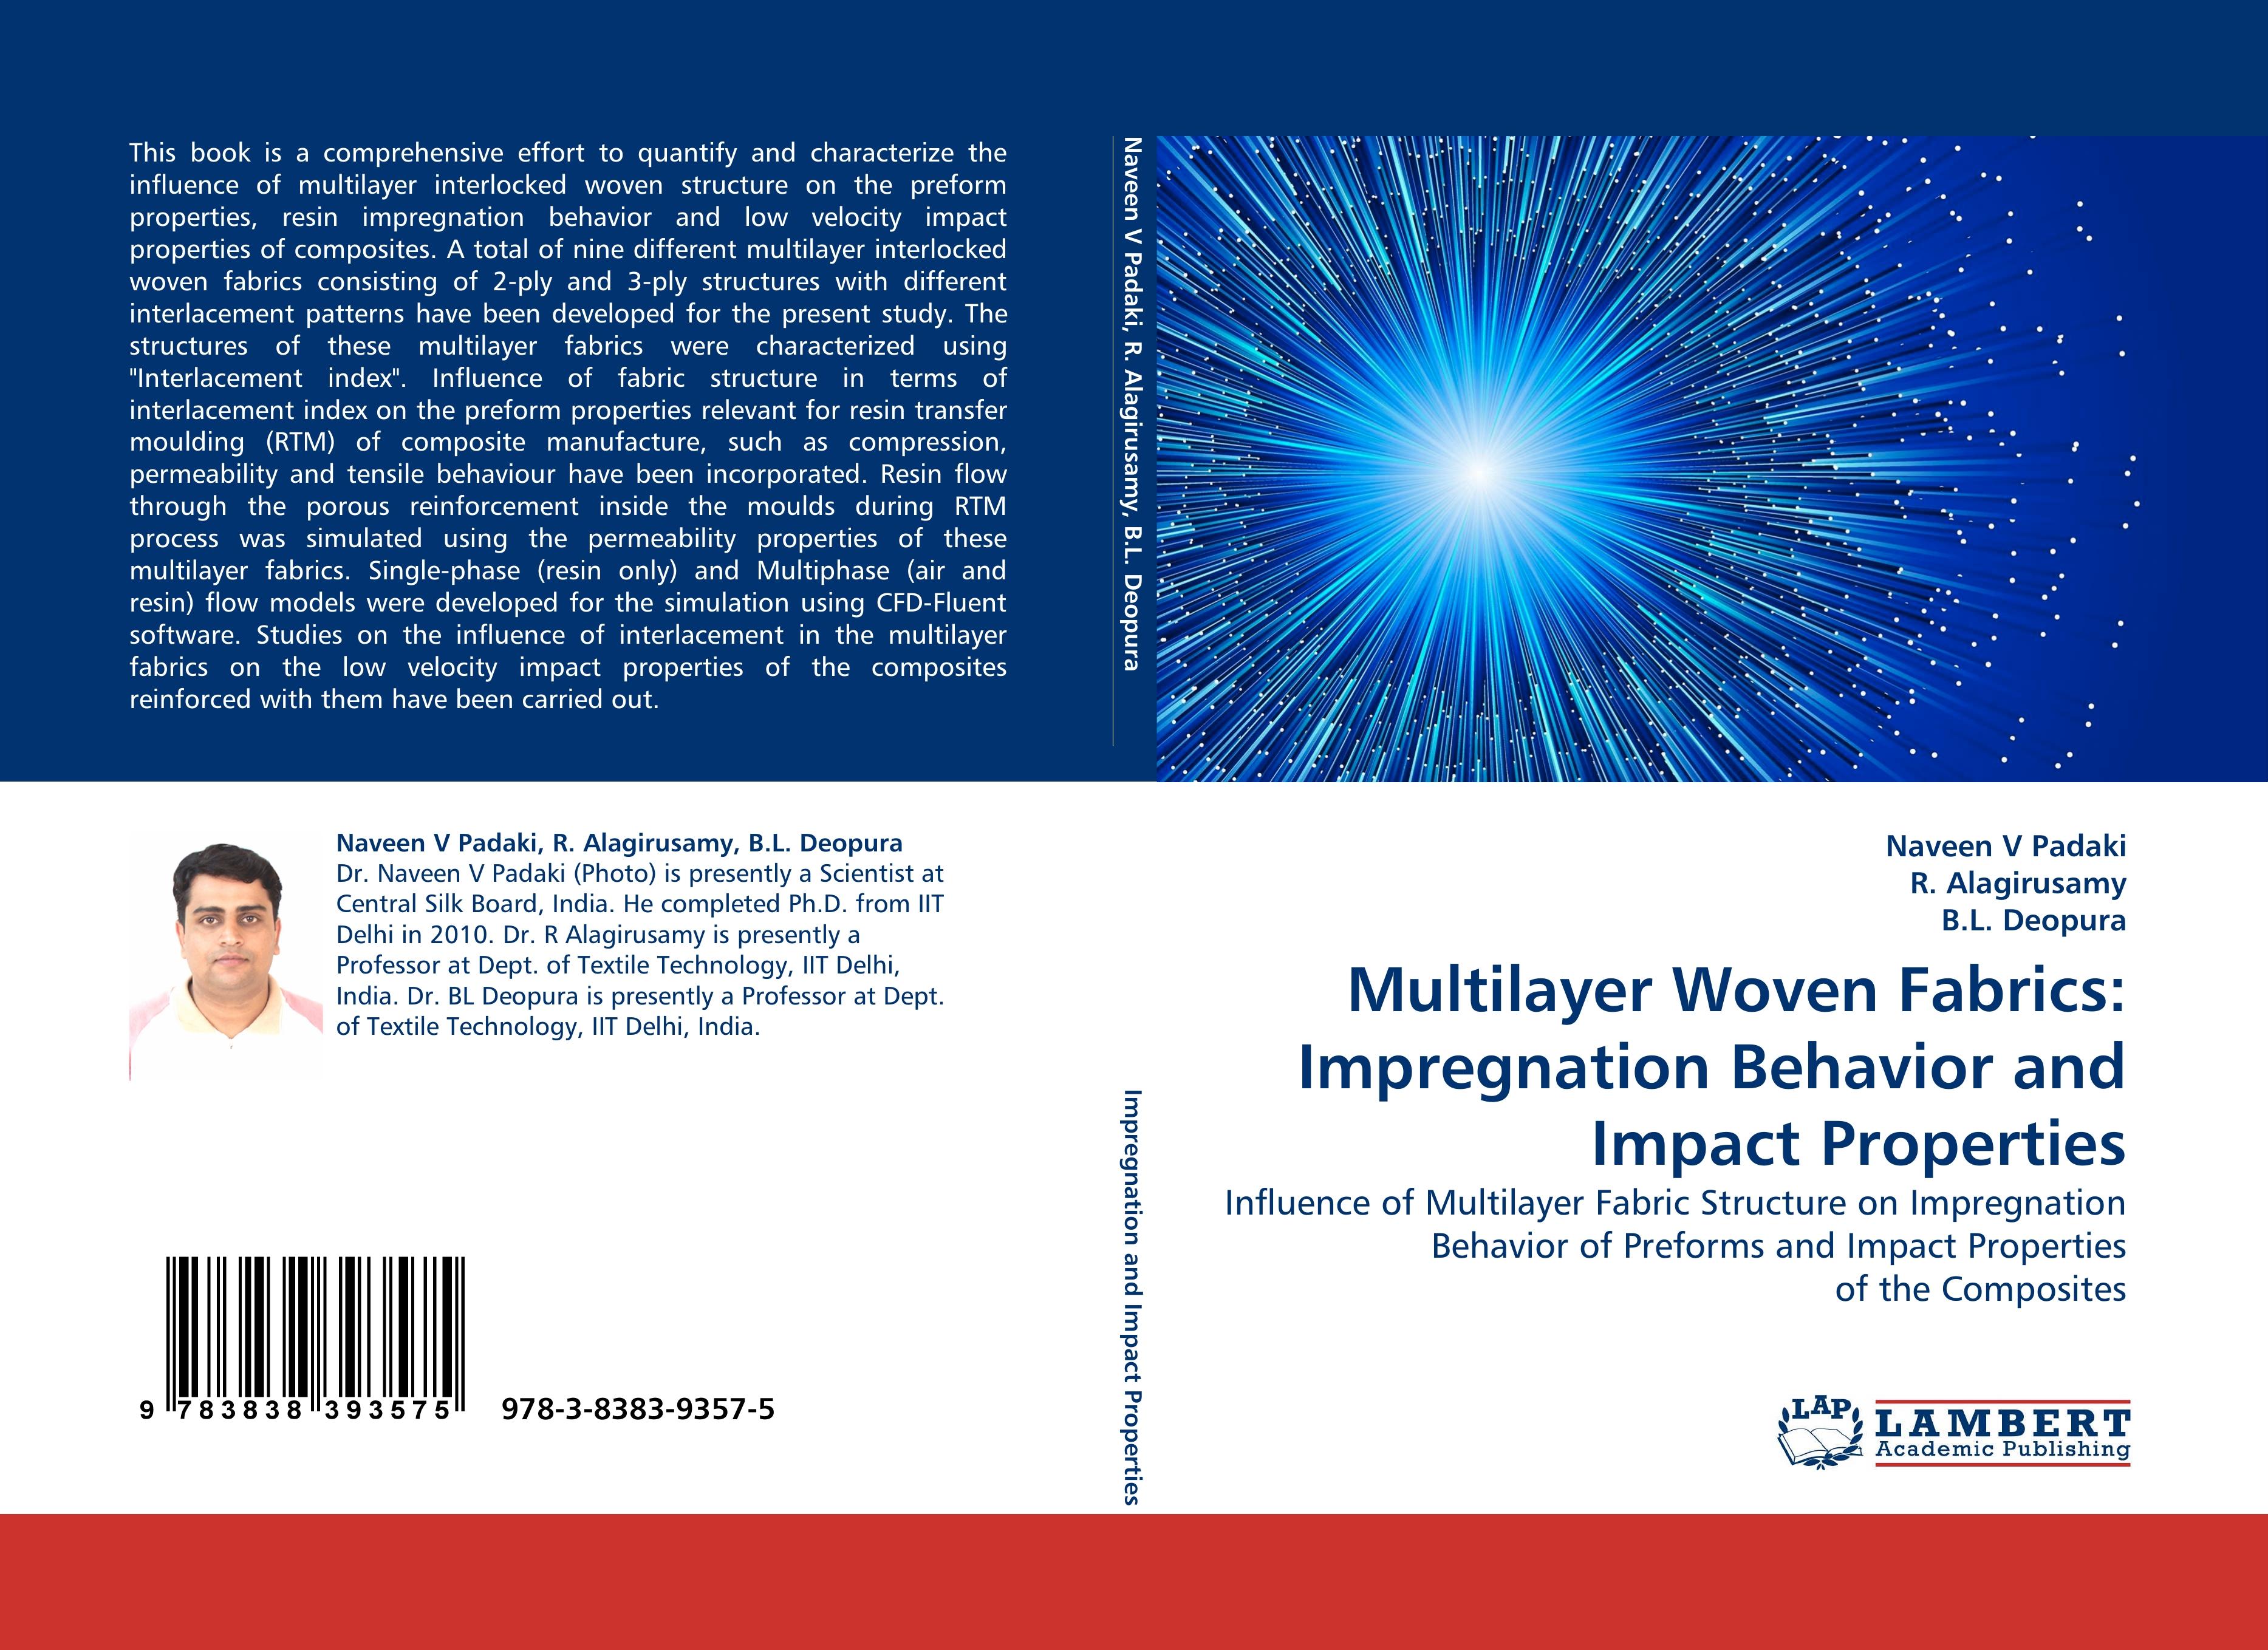 Multilayer Woven Fabrics: Impregnation Behavior and Impact Properties - Naveen V Padaki R. Alagirusamy B.L. Deopura